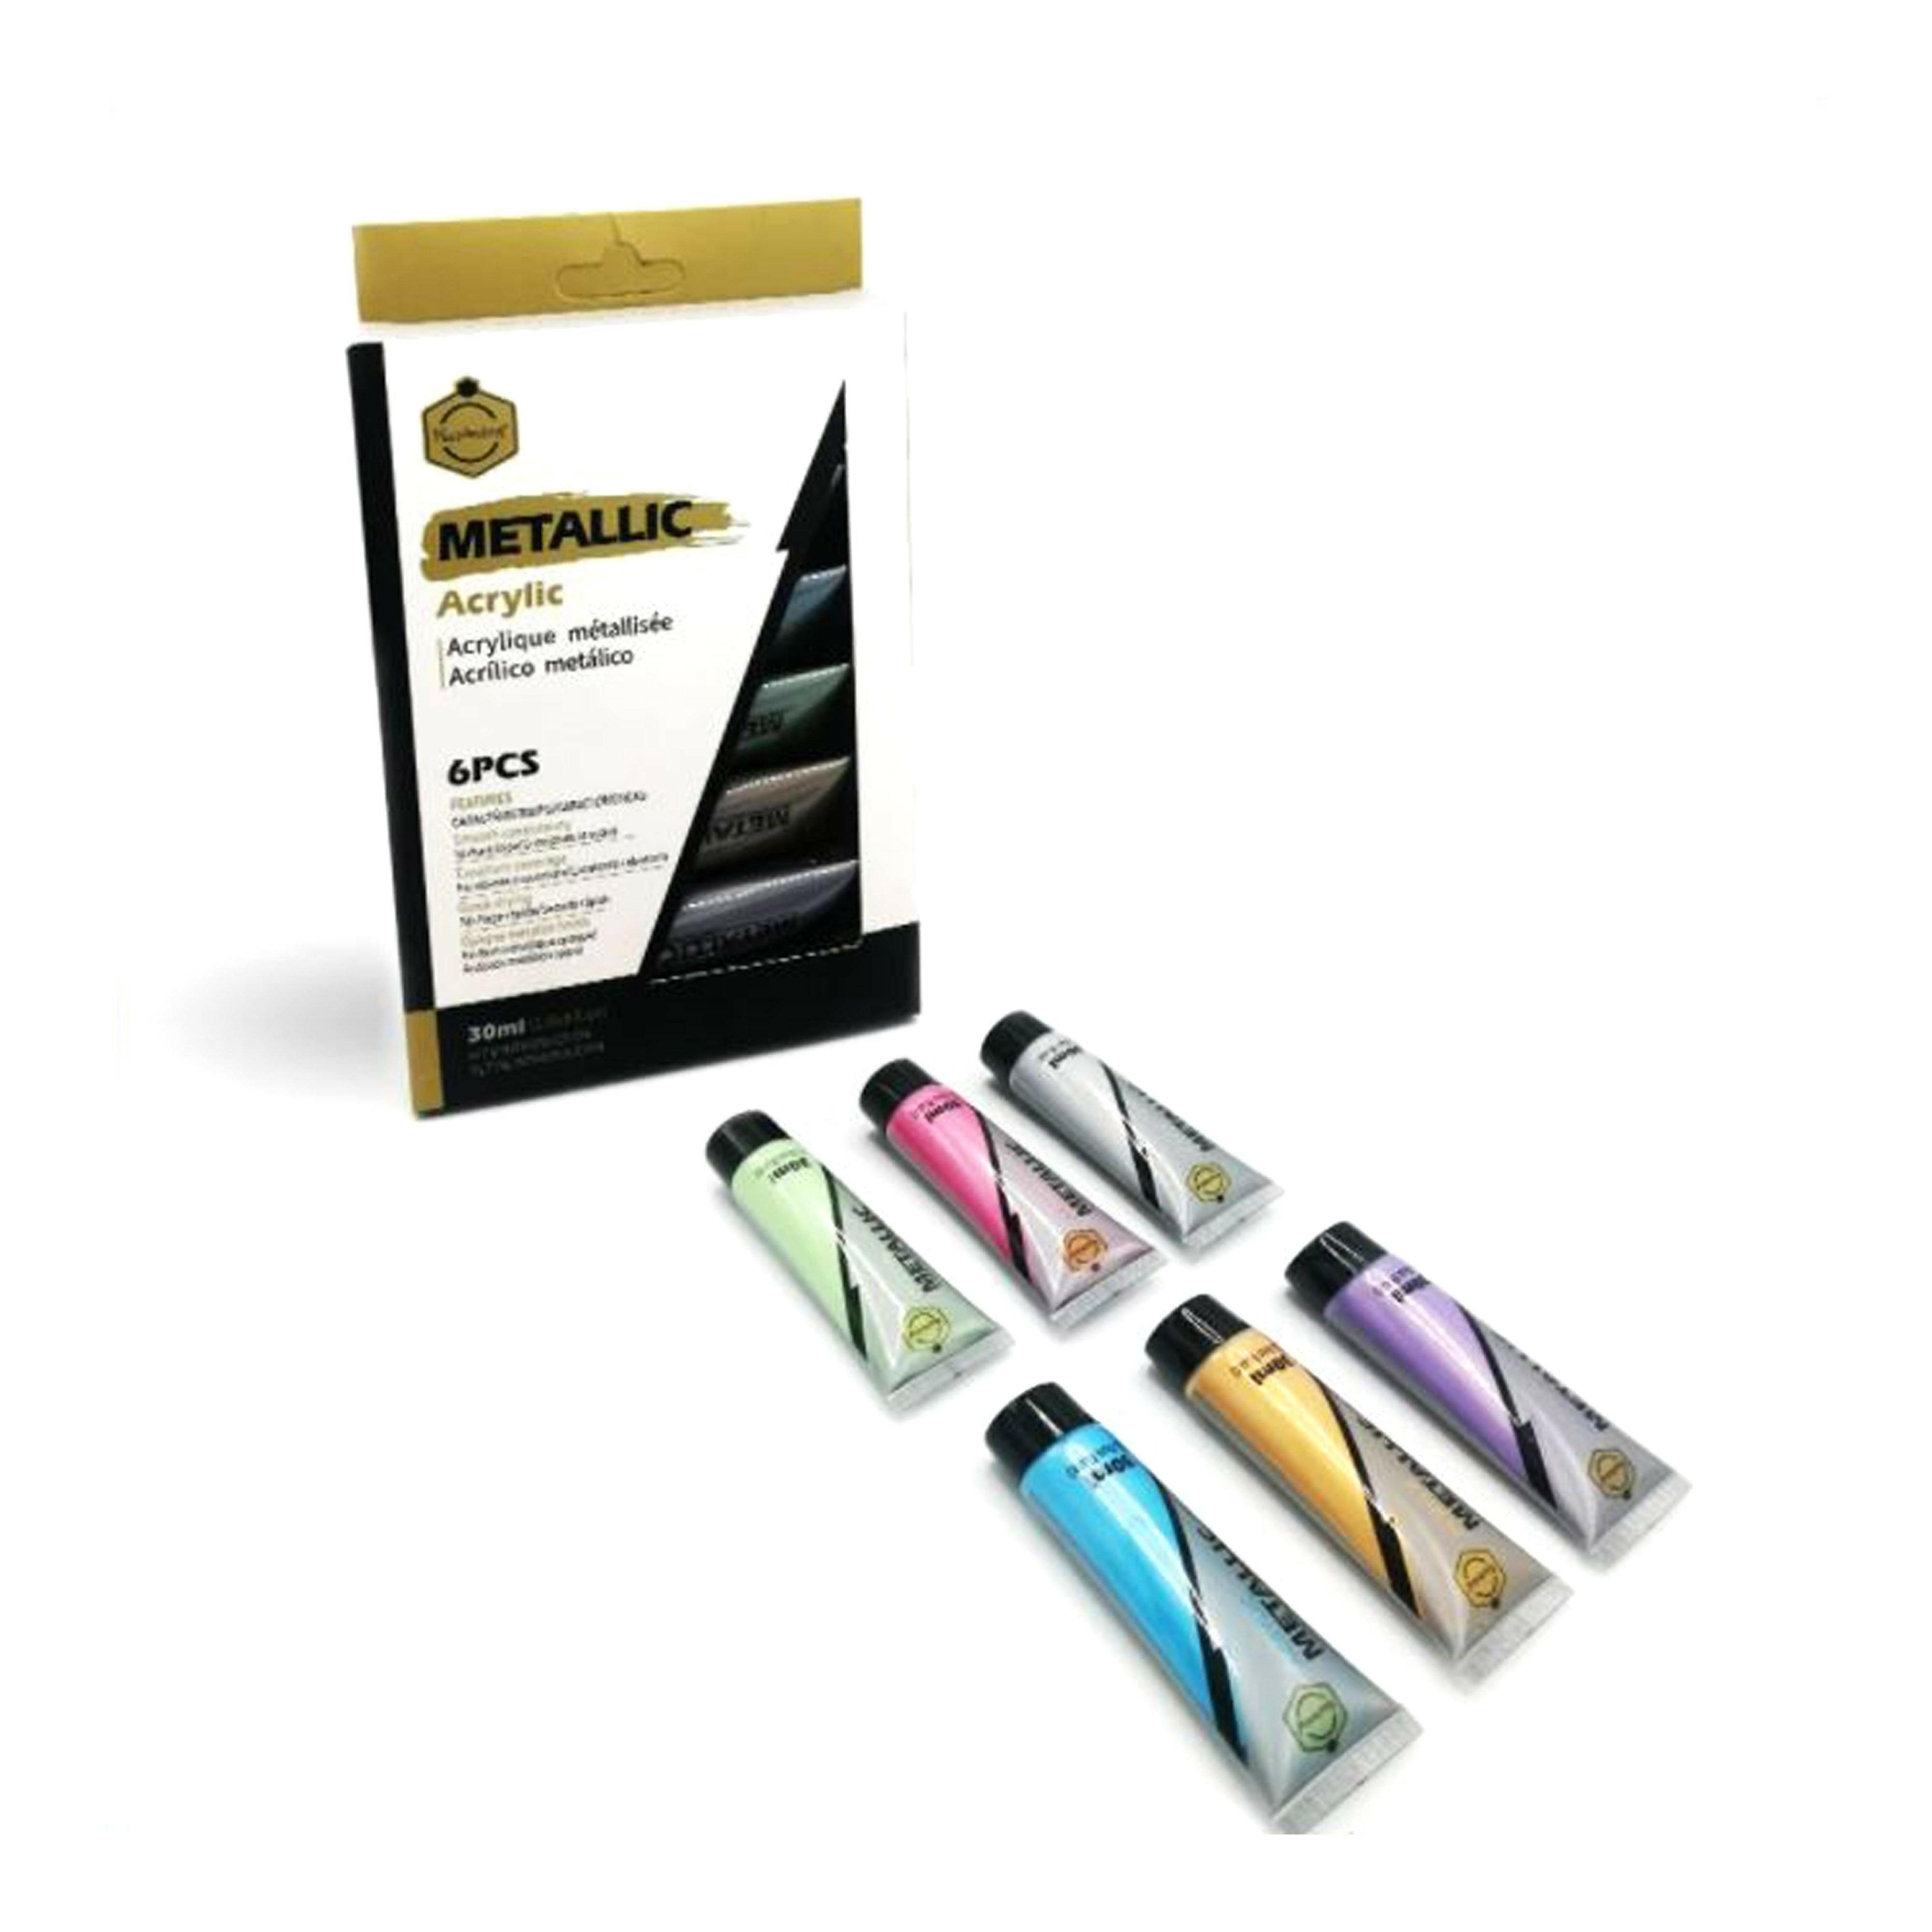 Keep_ Smiling - Metallic Acrylic Colors Paint Tube Set 30ml Pack of 6 - ValueBox